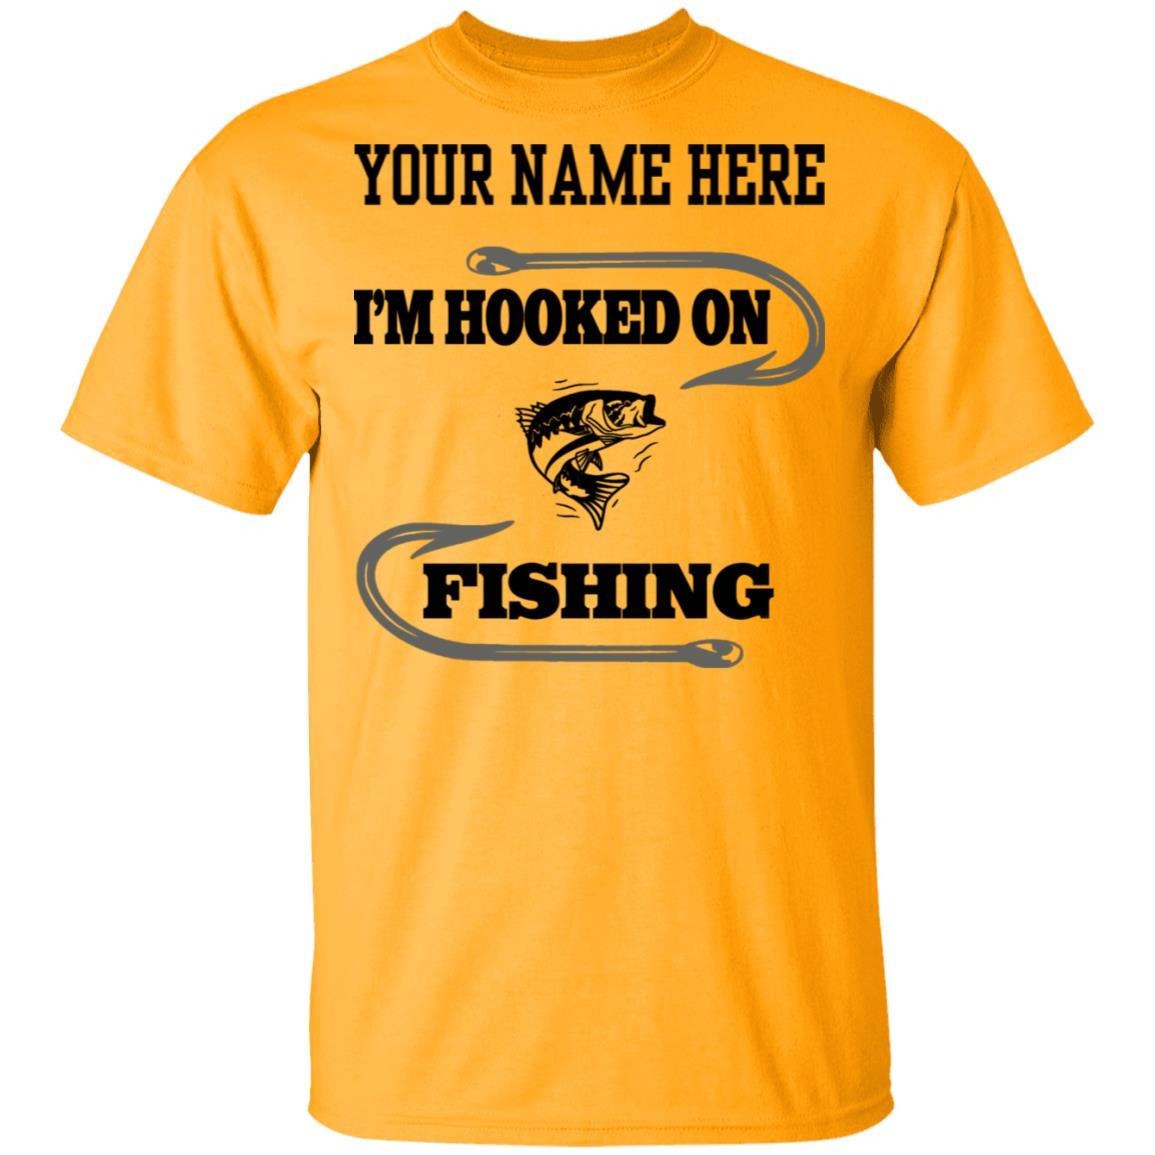 I'm hooked on fishing t-shirt b gold